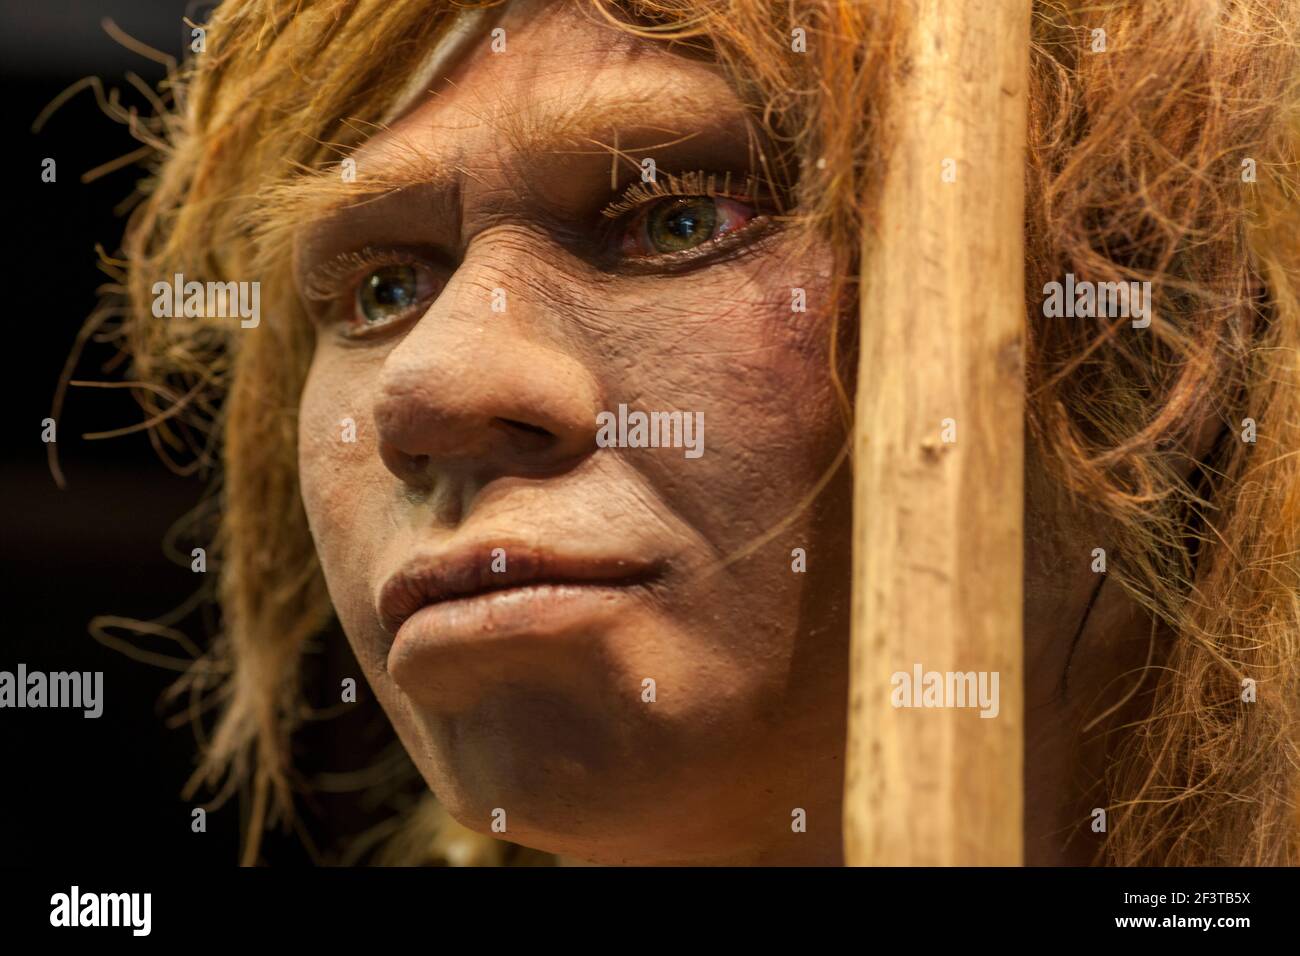 Lebensgroße Skulptur der Neandertalerin, MANN Madrid. Selektiver Fokus. Nahaufnahme des Gesichts Stockfoto